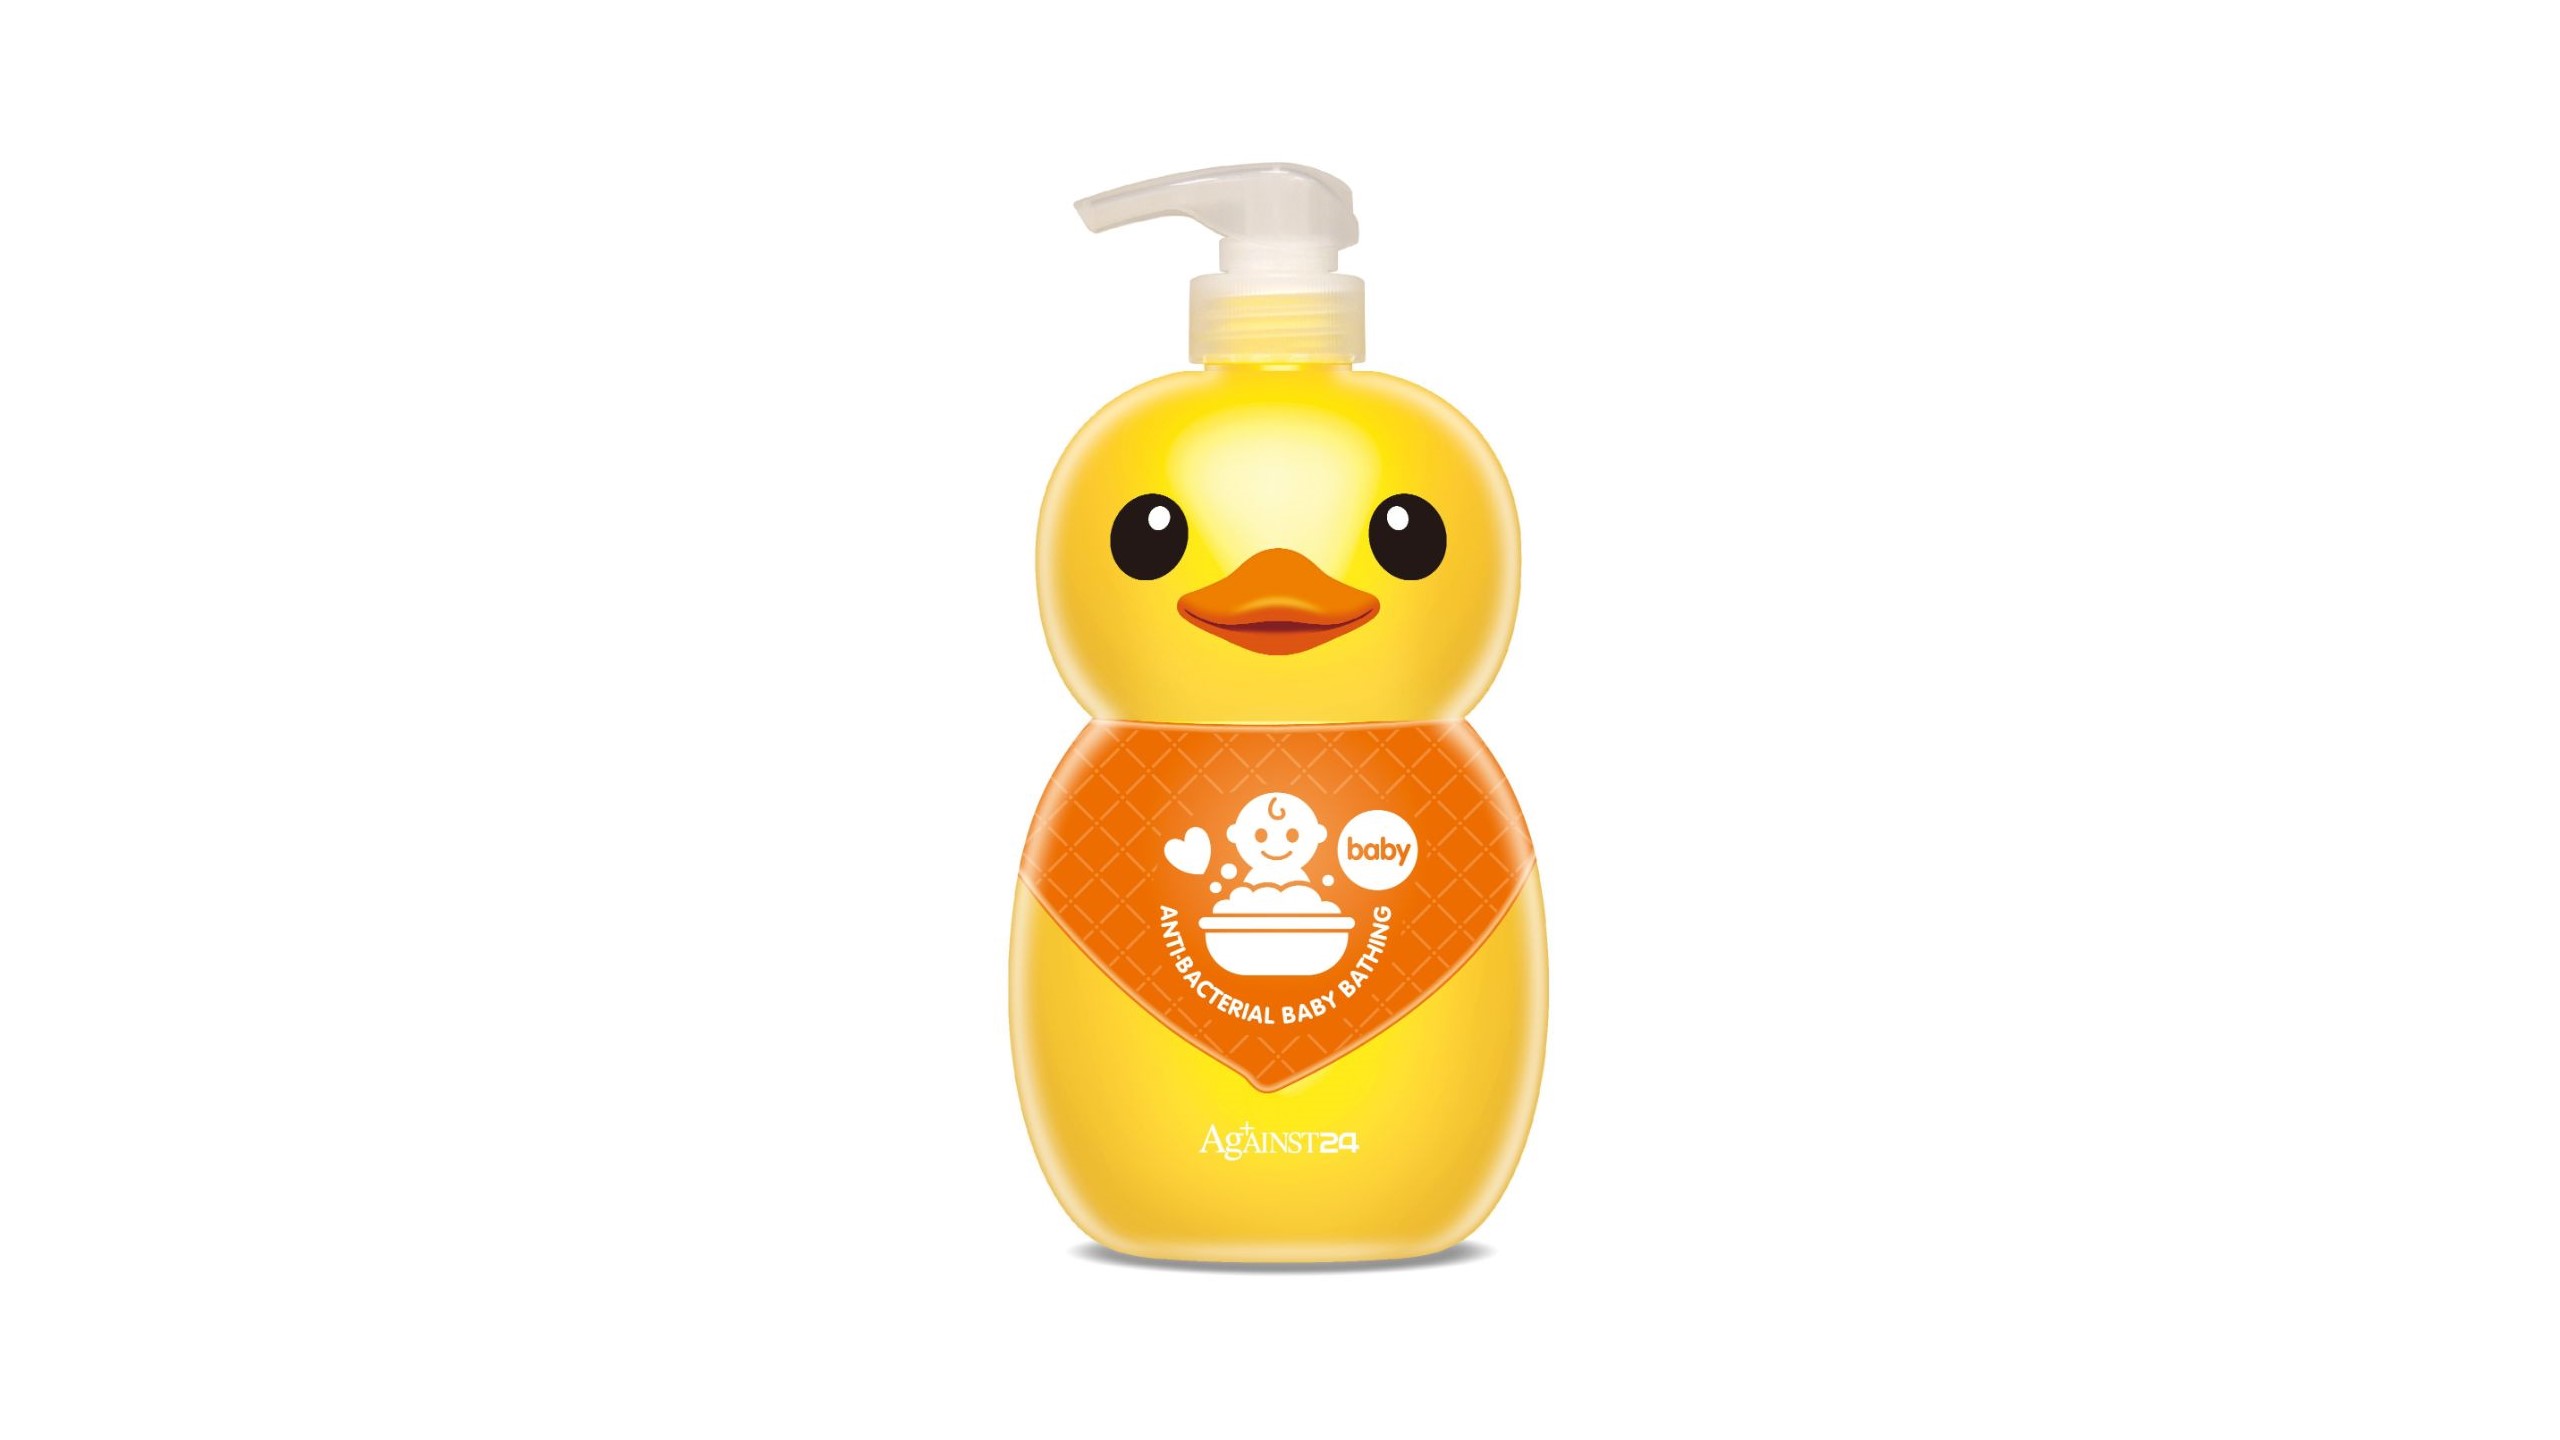 baby-fair Against24 Rubber Duck Anti-Bacterial Baby Bathing 1L